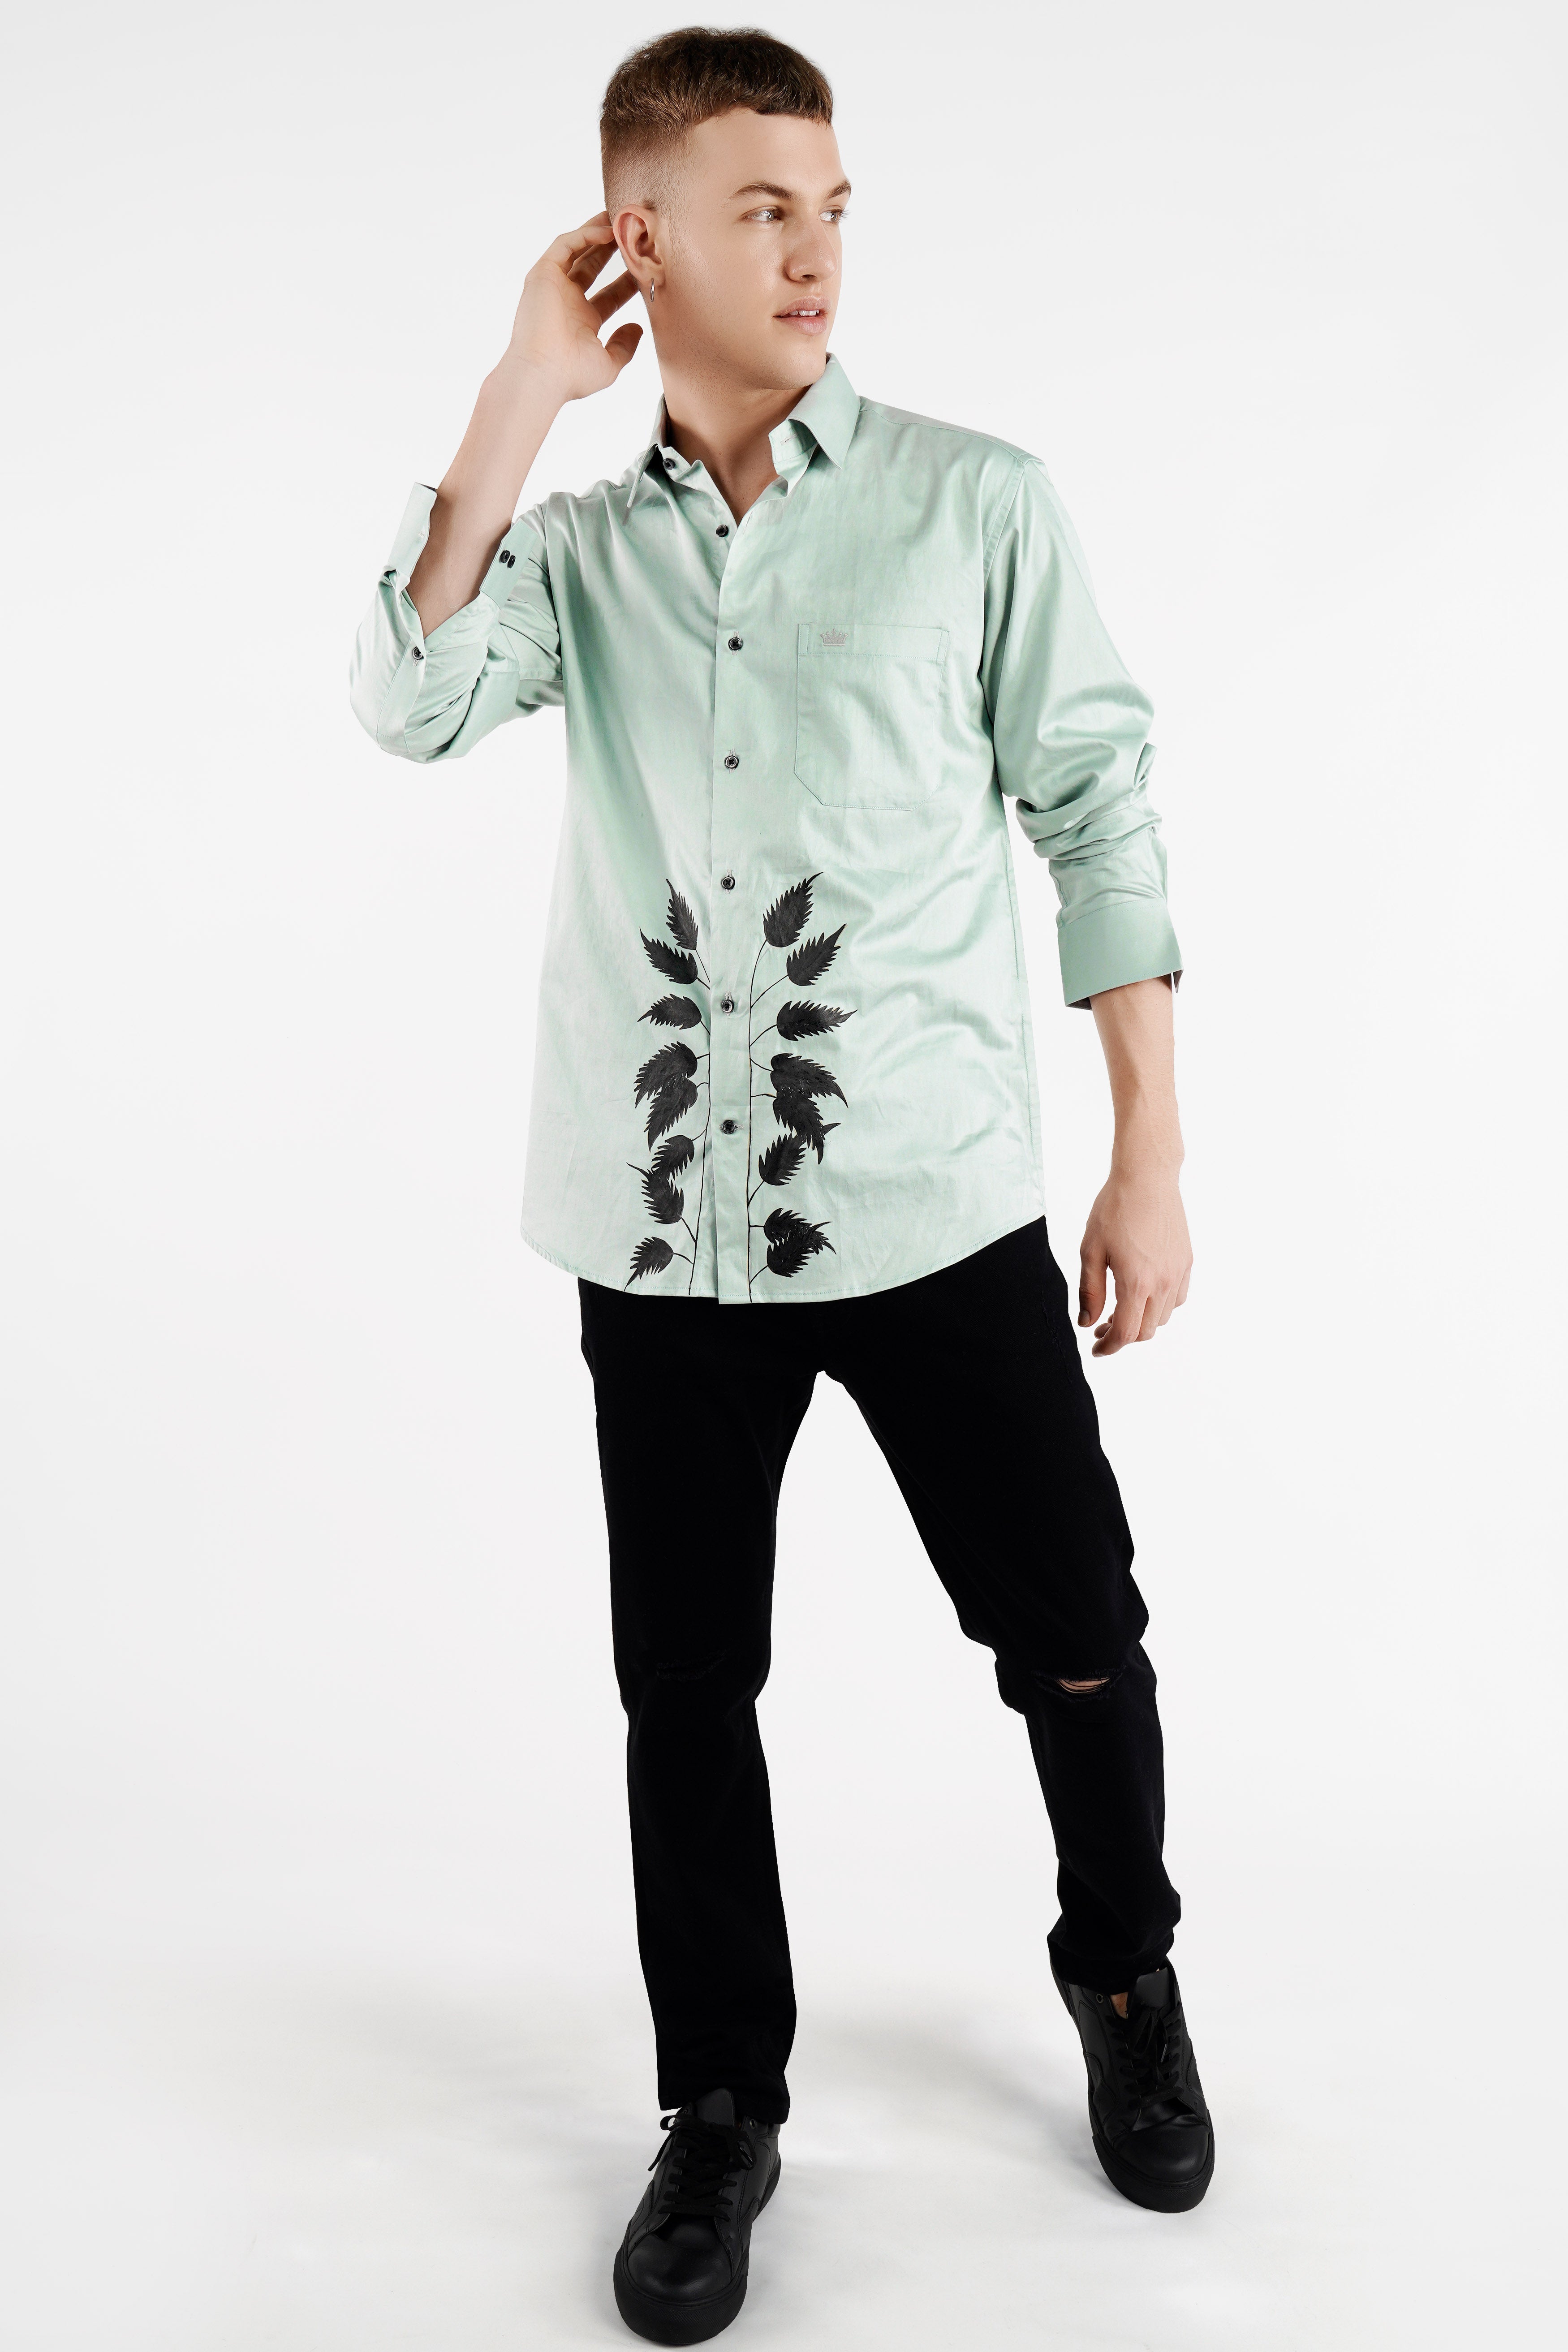 Gainsboro Green Leaves Hand Painted Super Soft Premium Cotton Designer Shirt